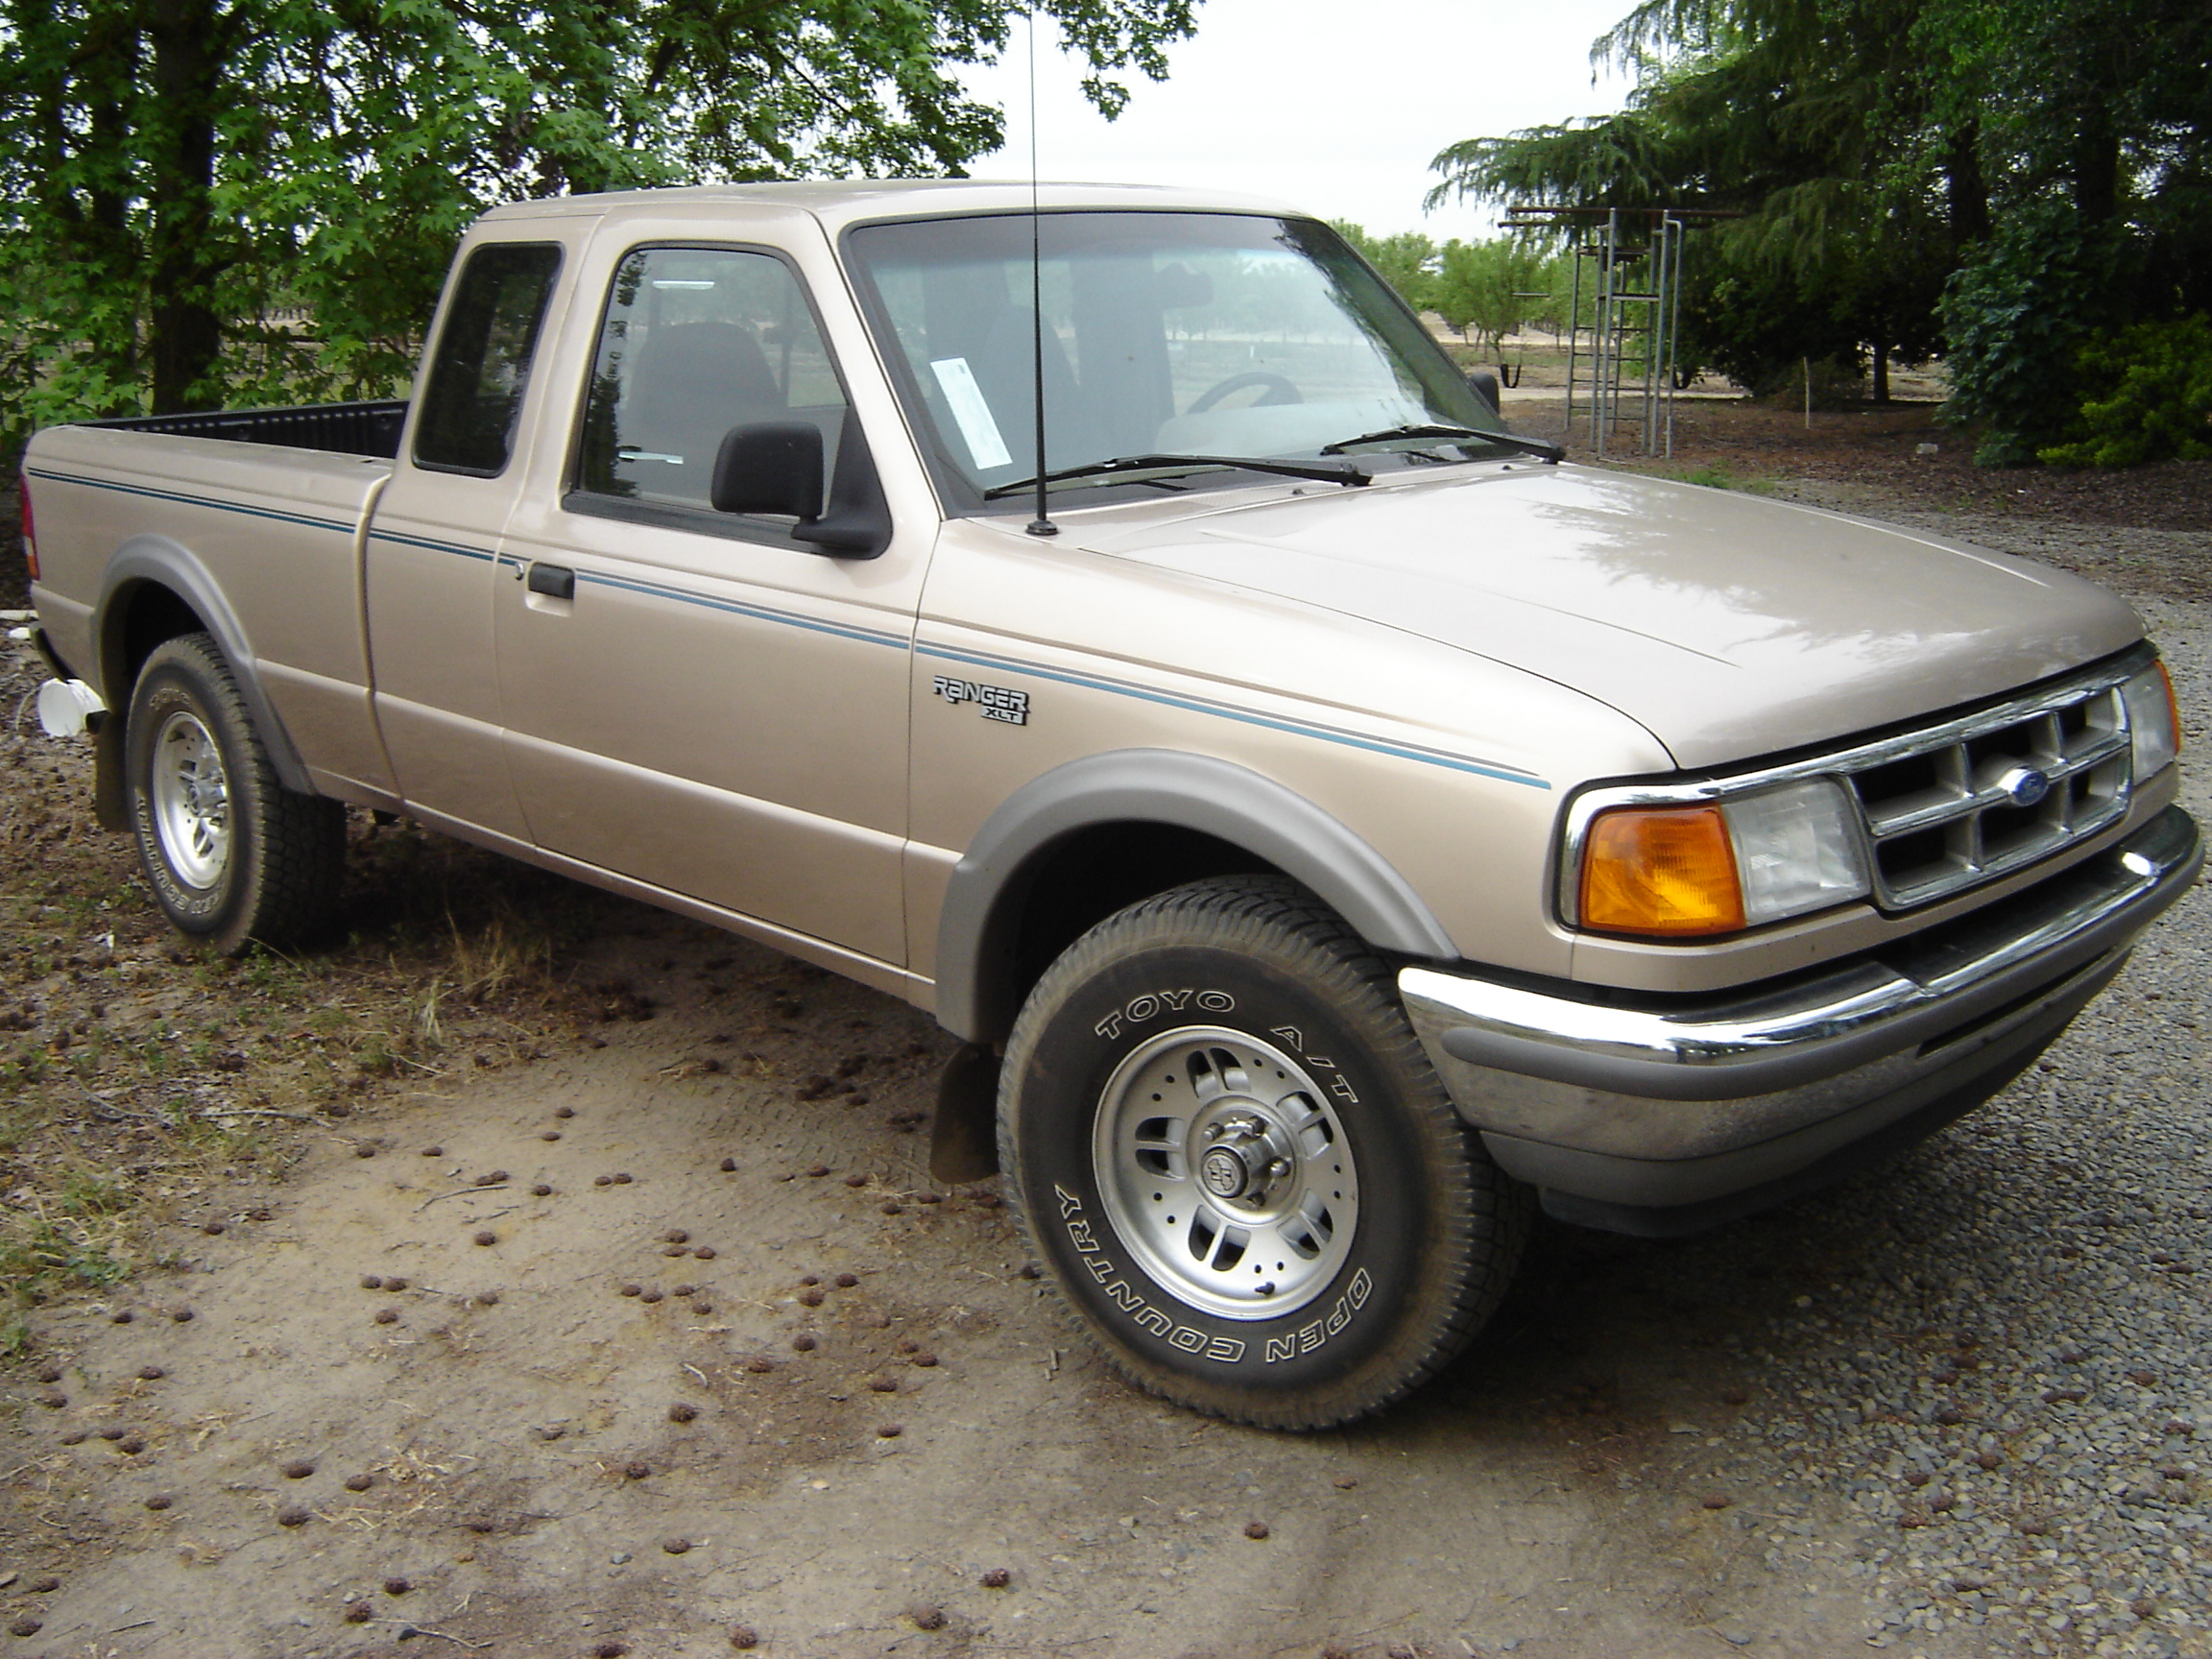 Ford Ranger (North America) I 1983 - 1988 Pickup #1